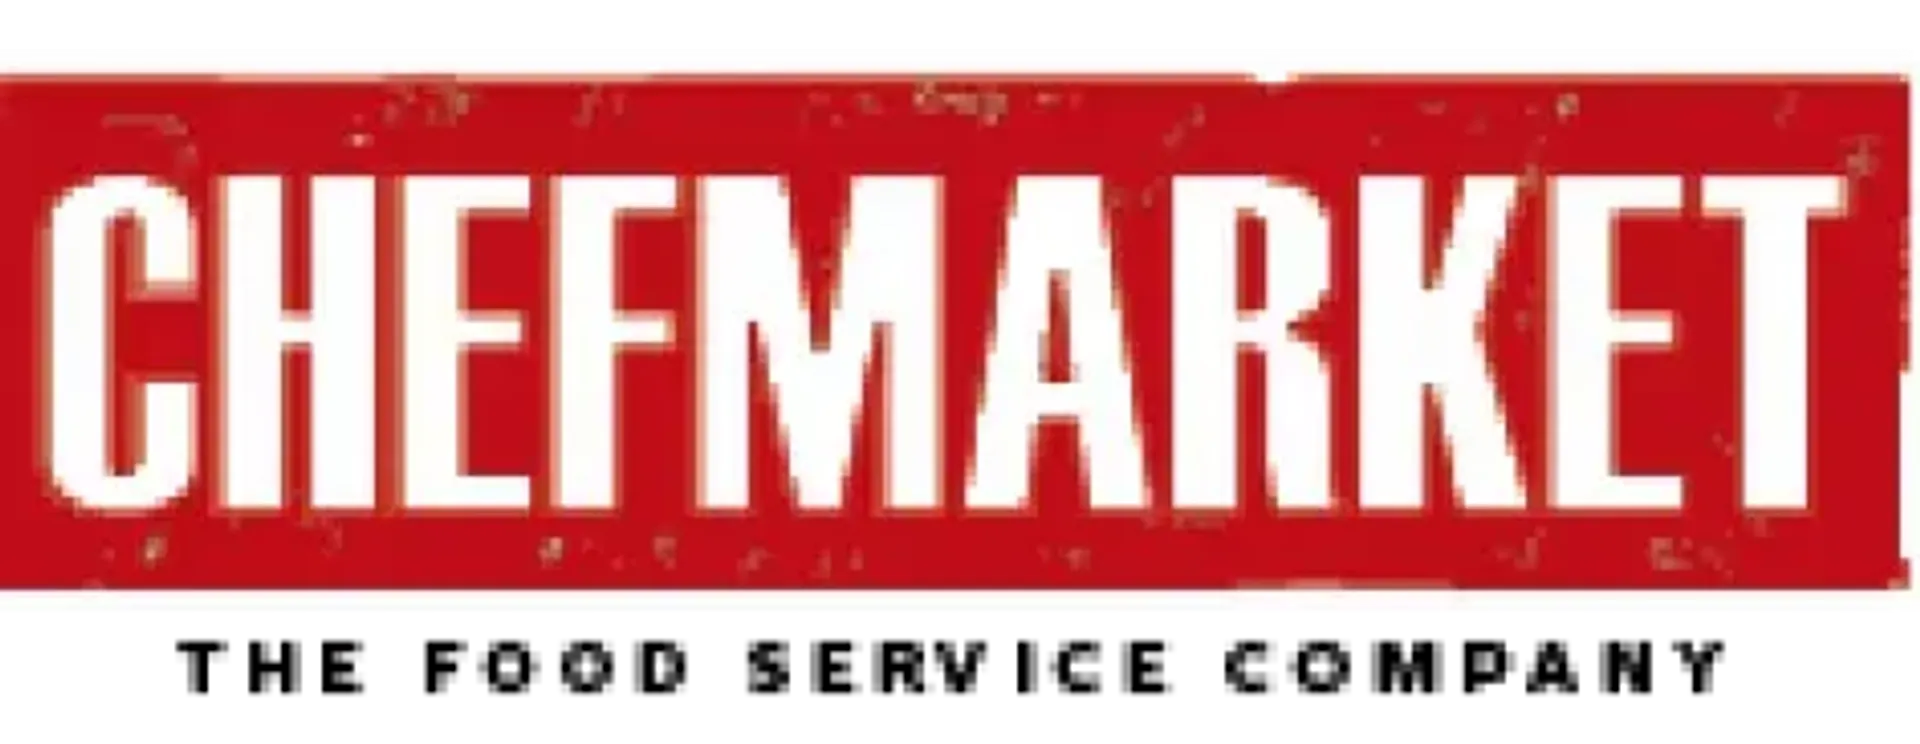 CHEF MARKET logo